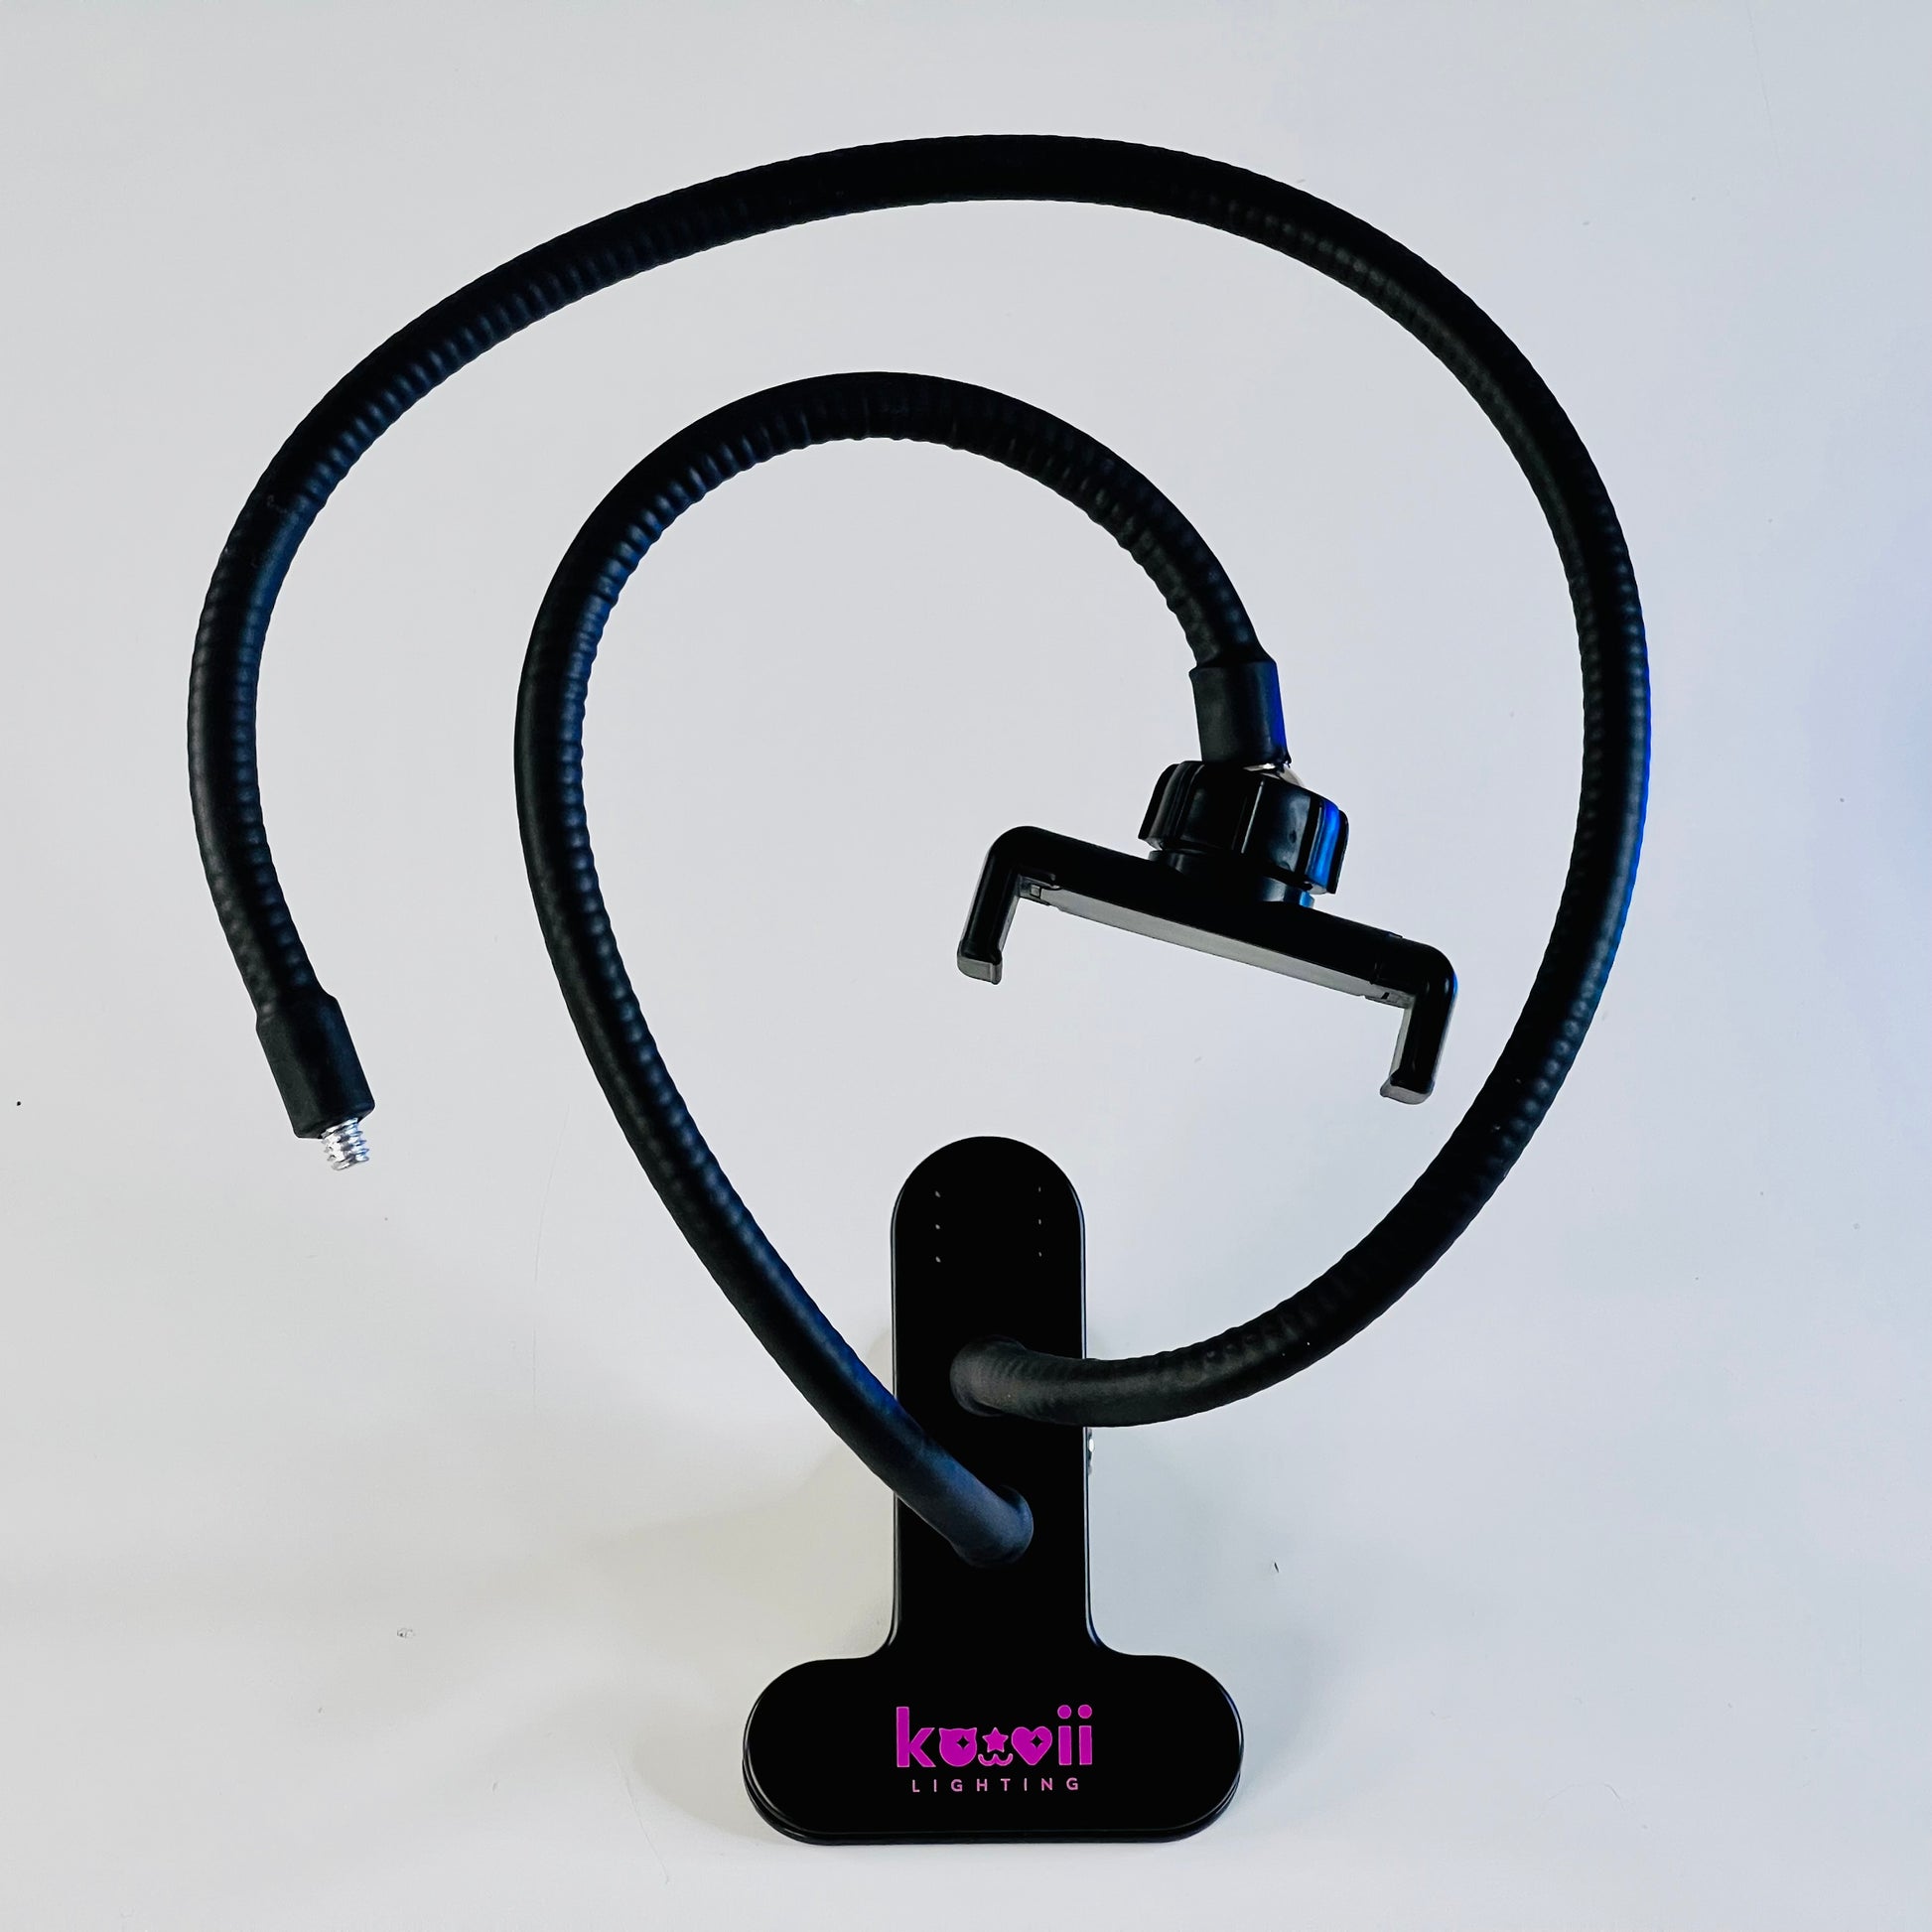 Kawaii Lighting Creator Kit - Phone Holder and Desk Clamp.